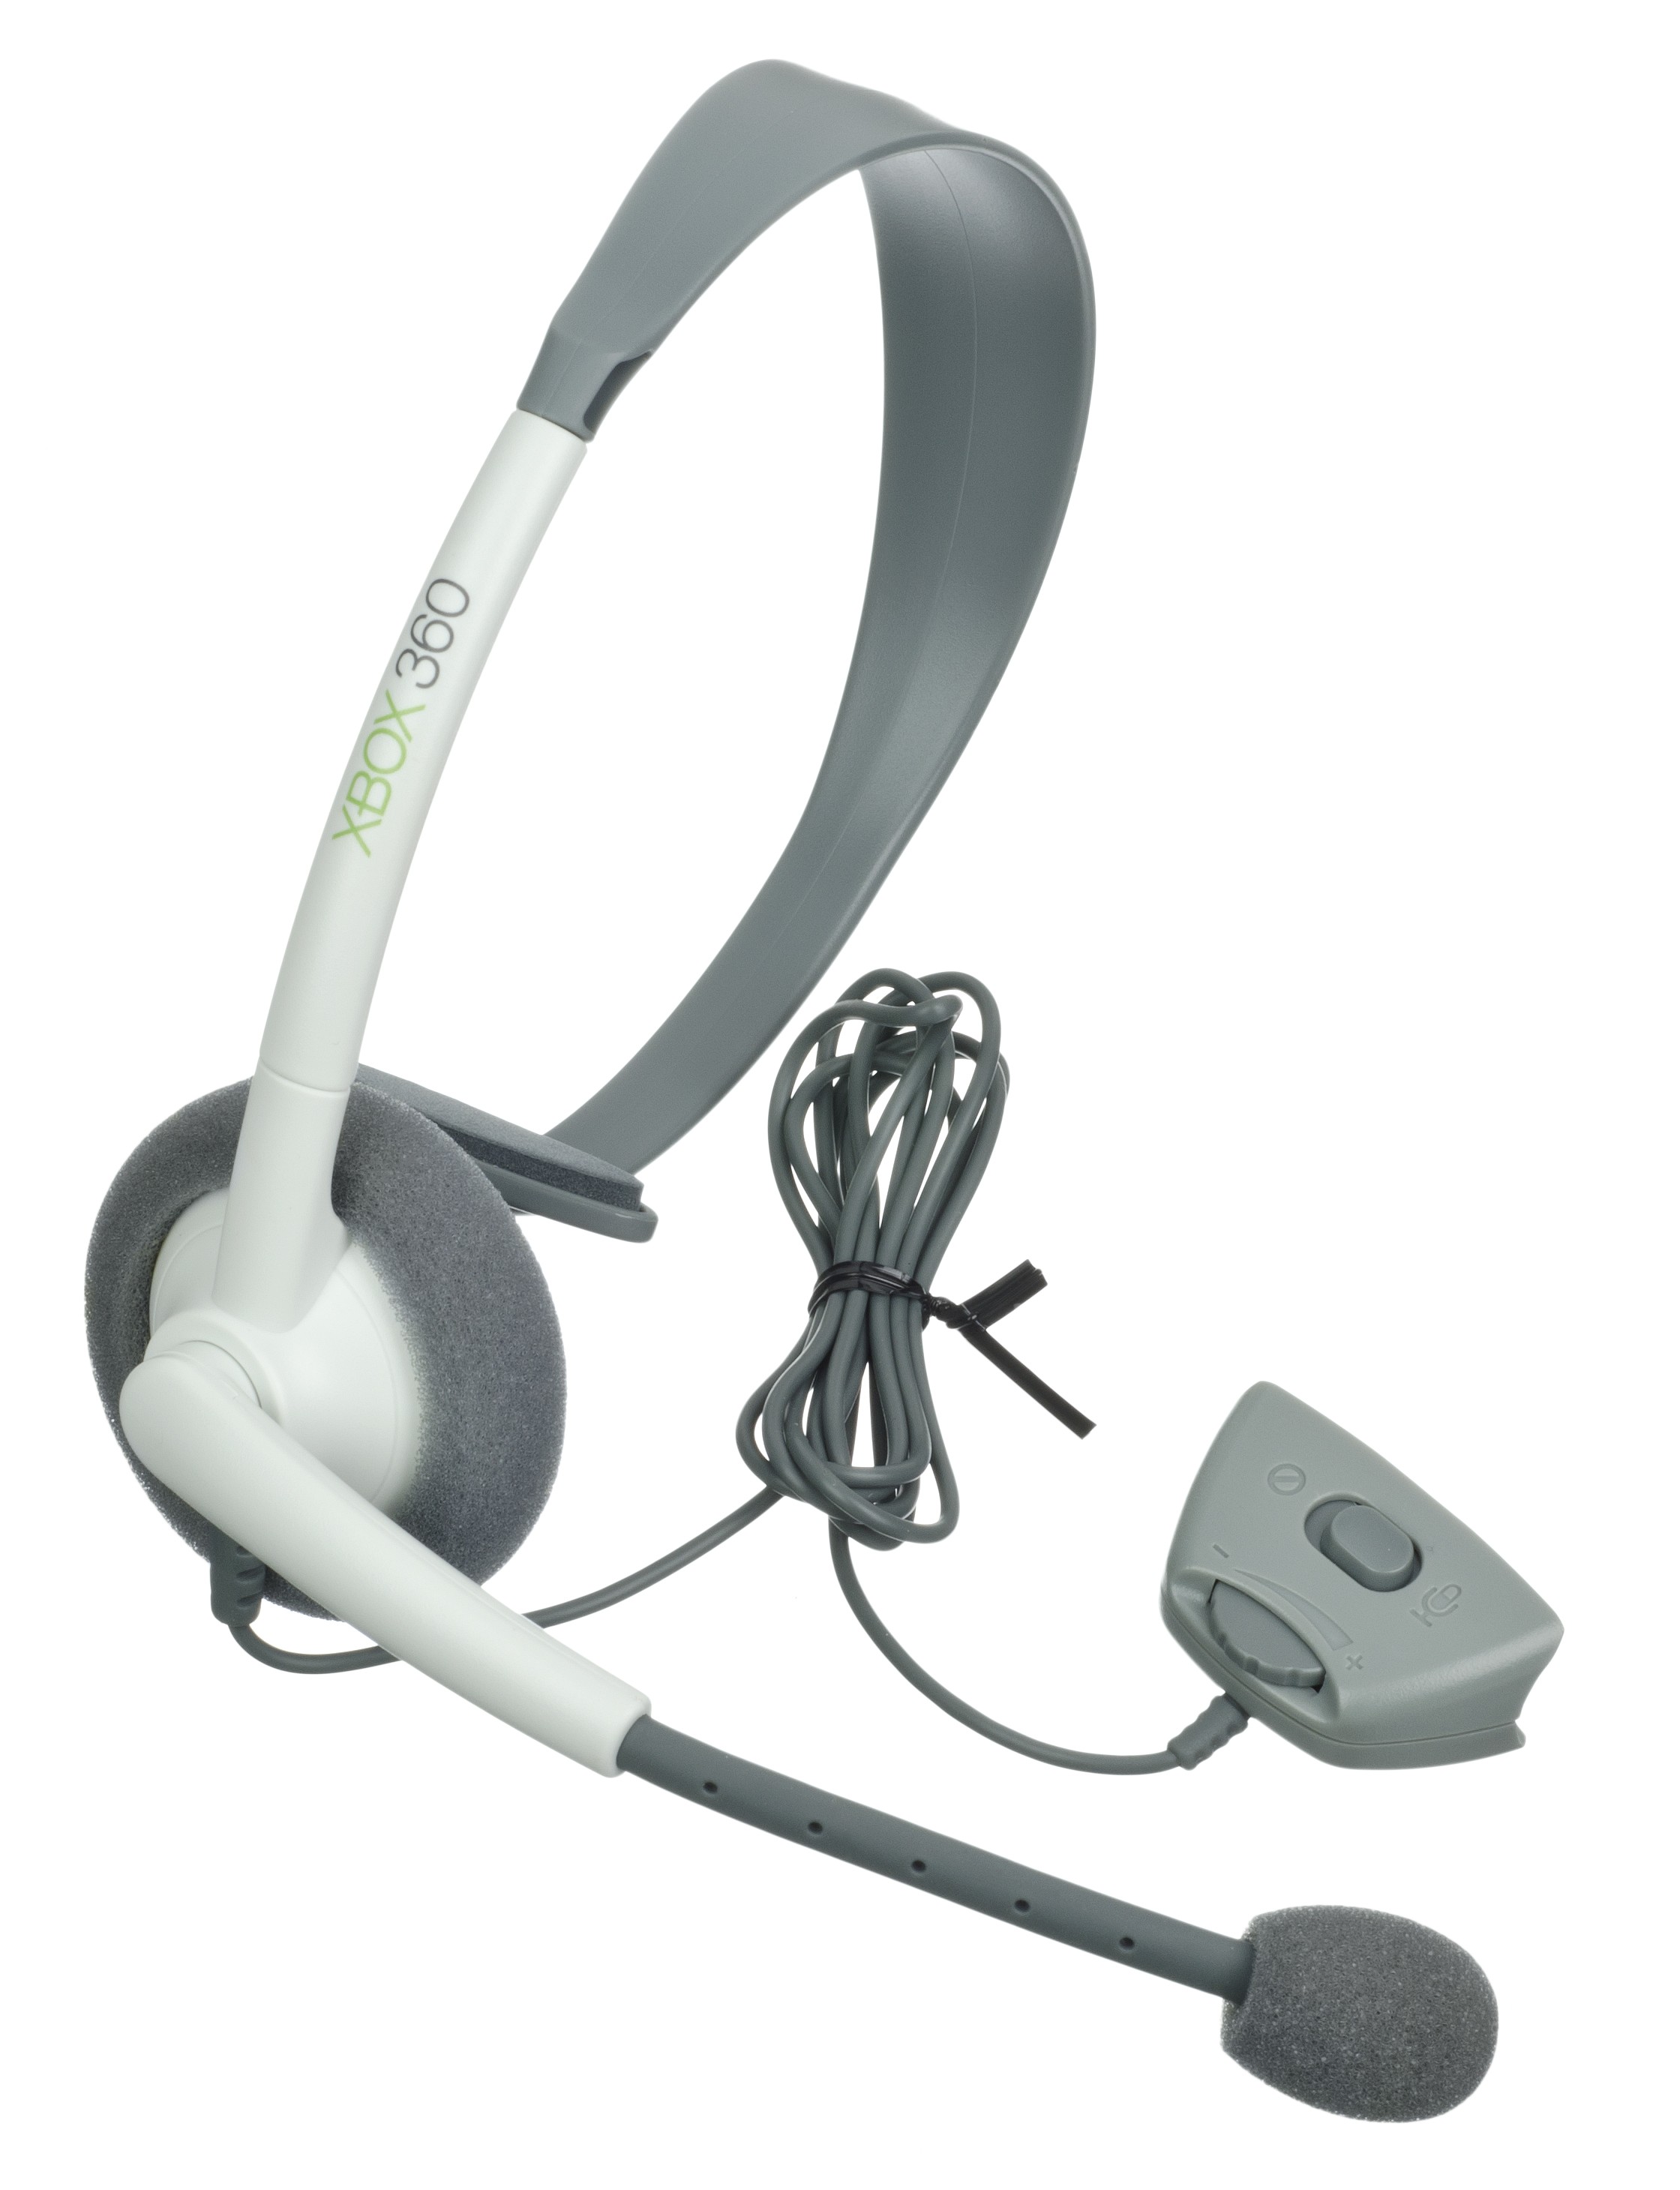 Best Xbox 360 Headset Wiring Diagram Gallery Wiring Diagram Ideas